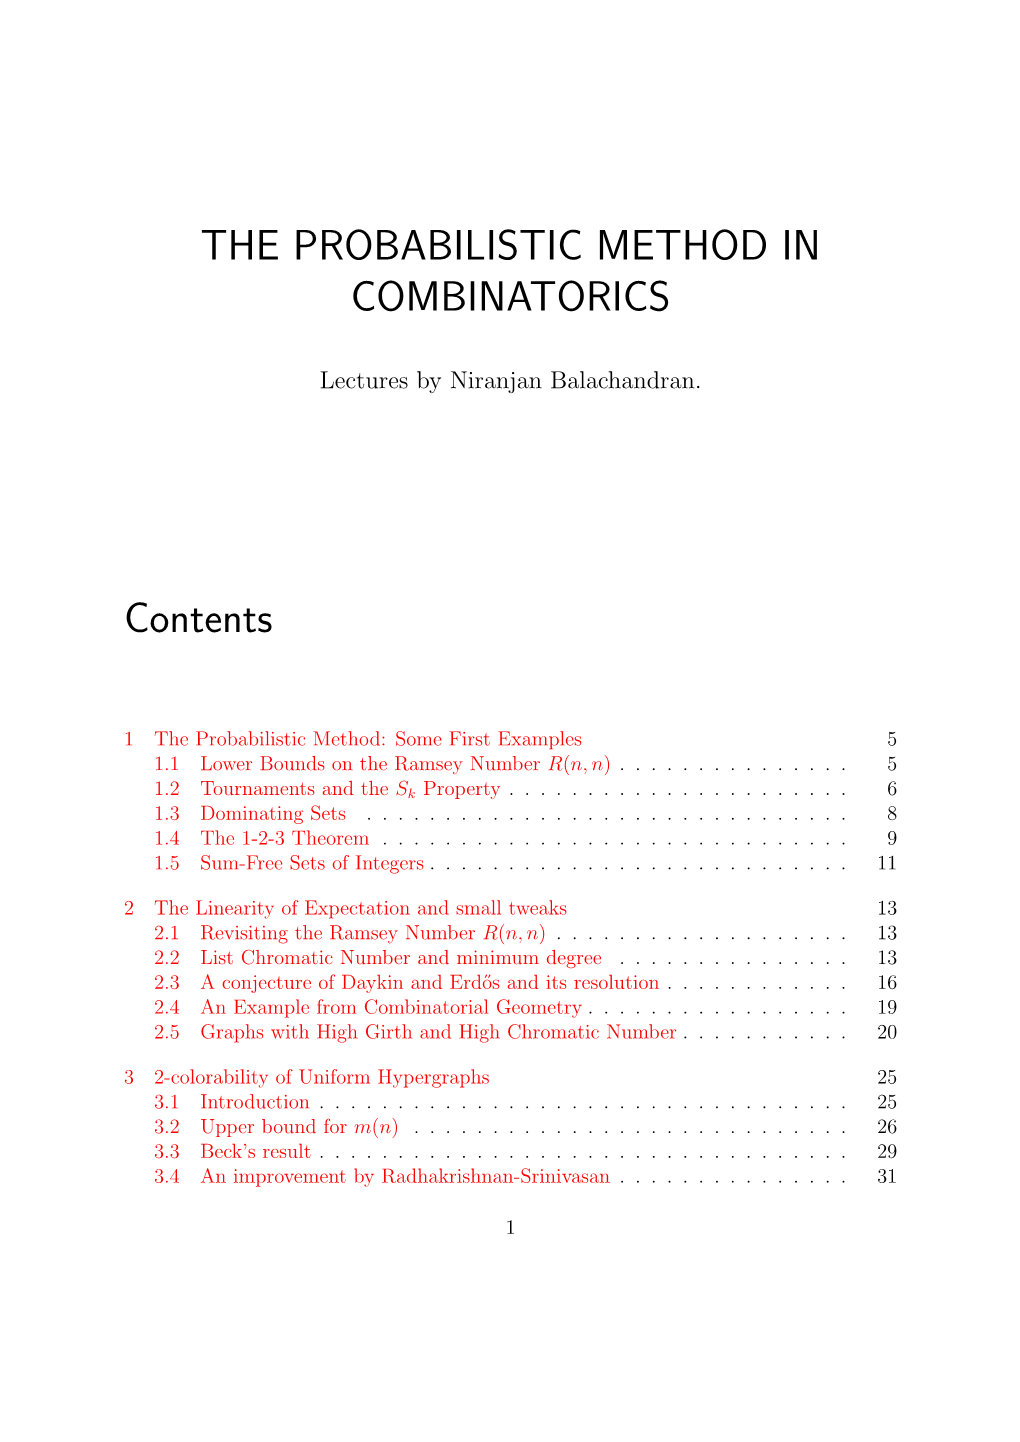 The Probabilistic Method in Combinatorics